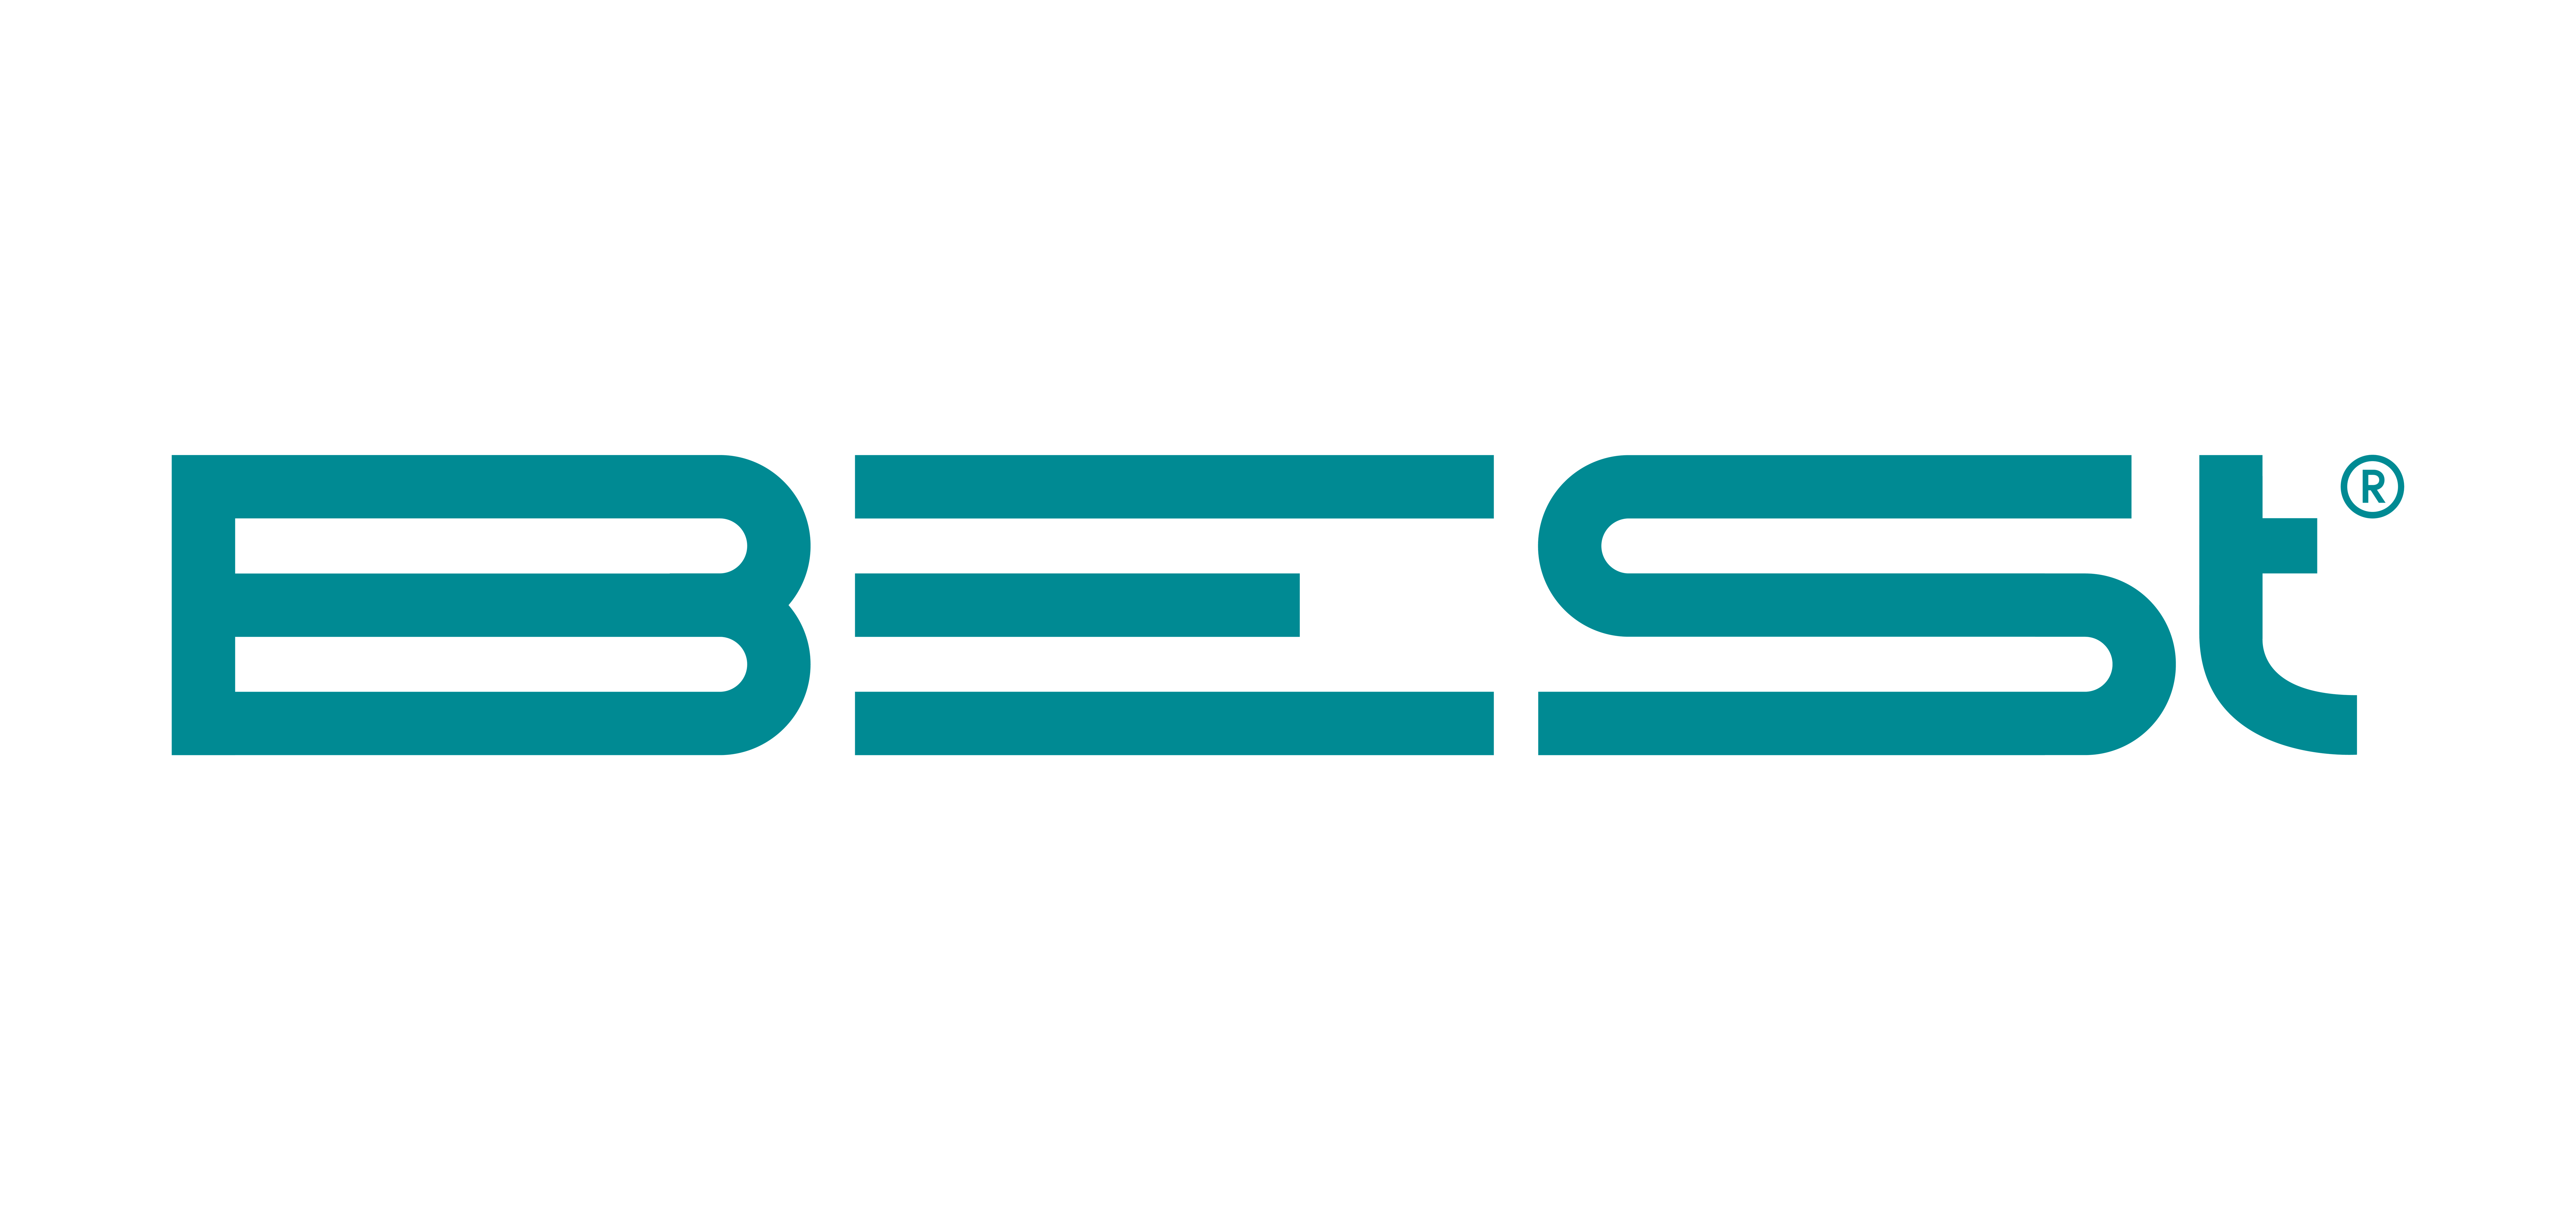 B-E-ST by Jeecee